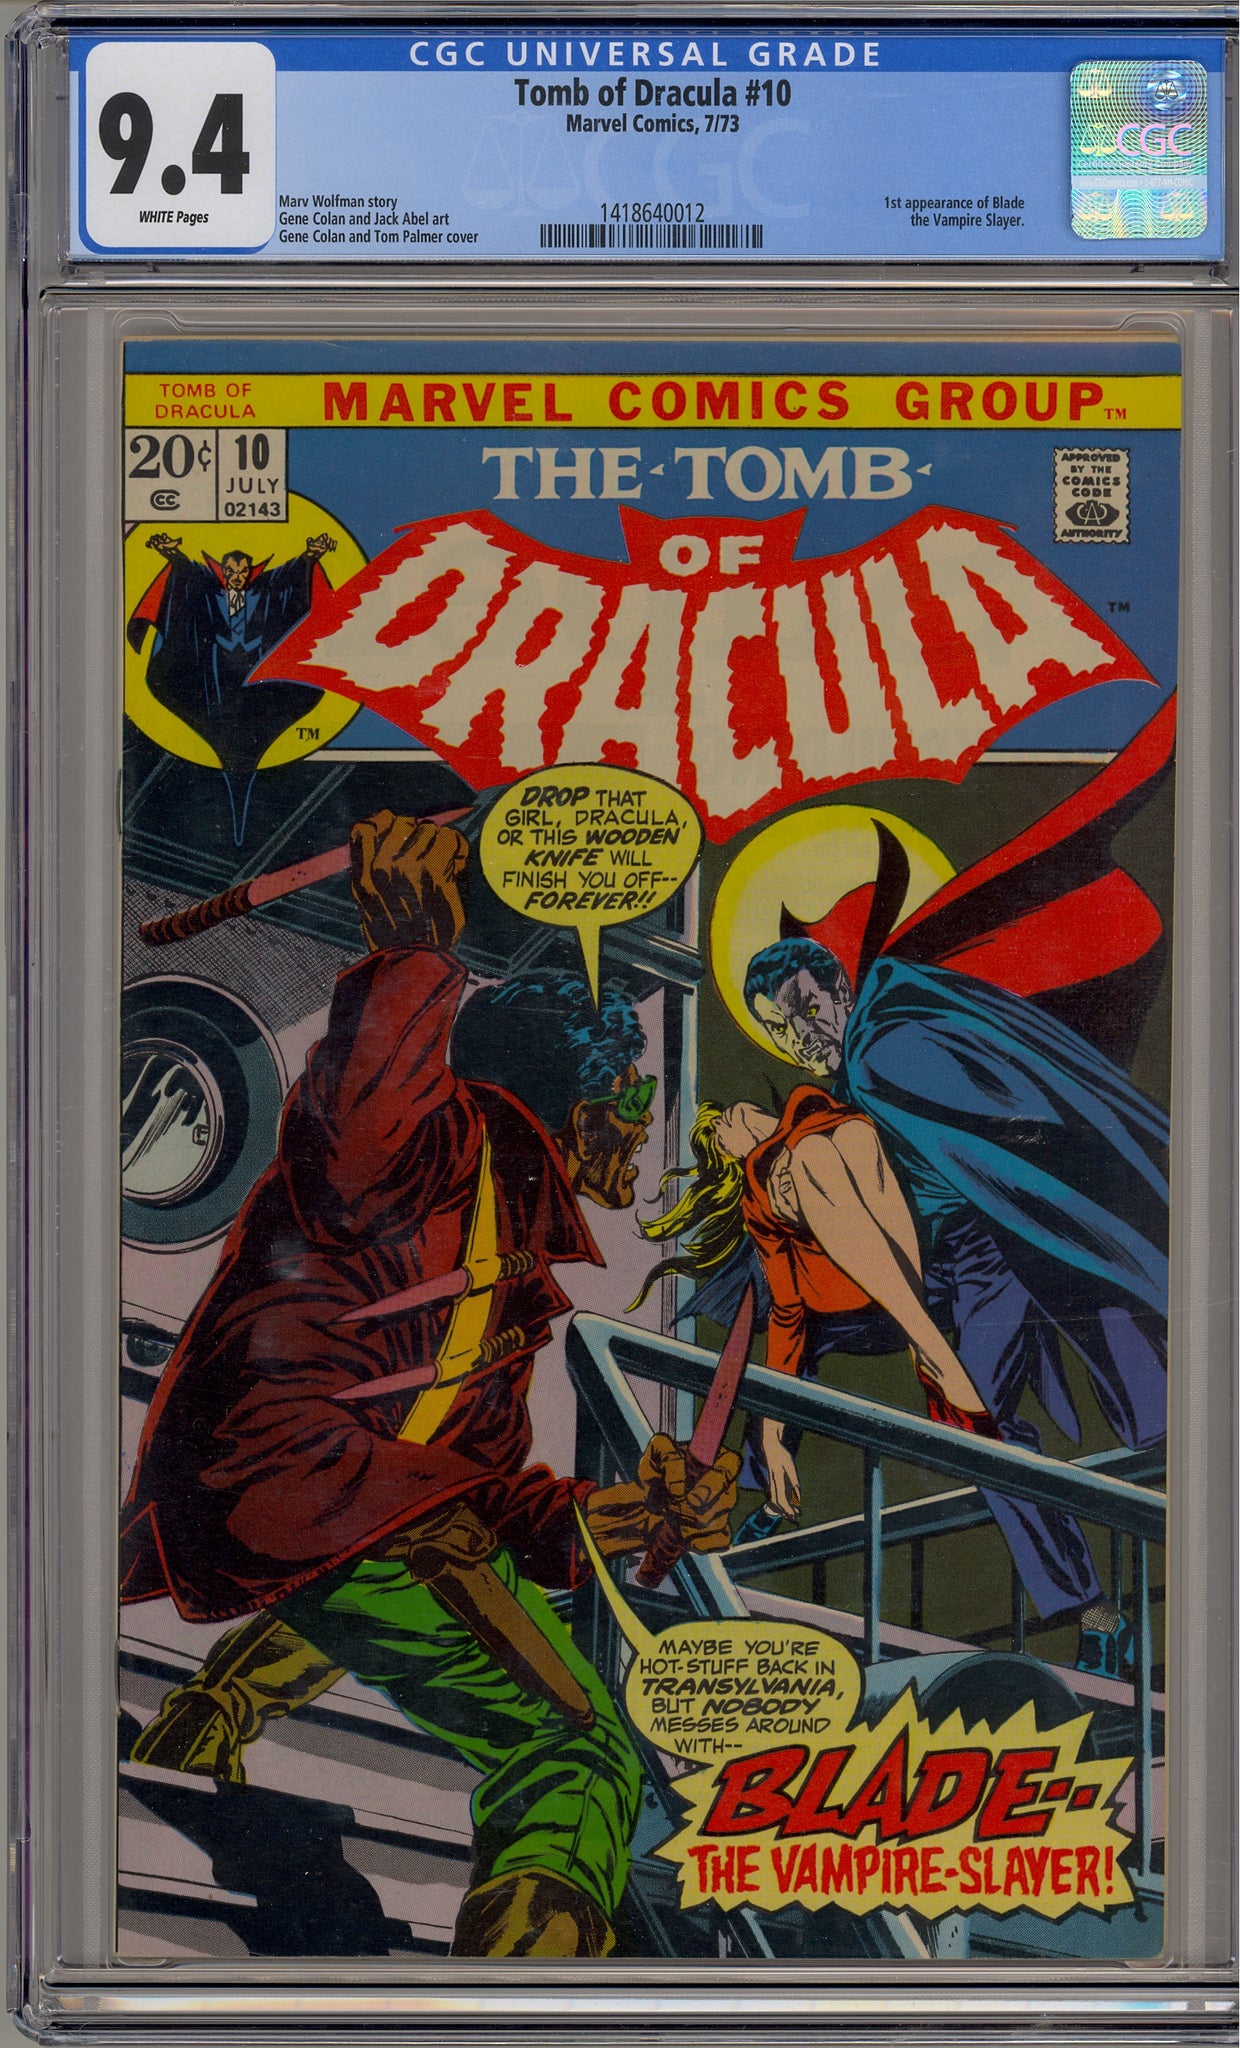 Tomb of Dracula #10 (1973) Blade the Vampire Slayer